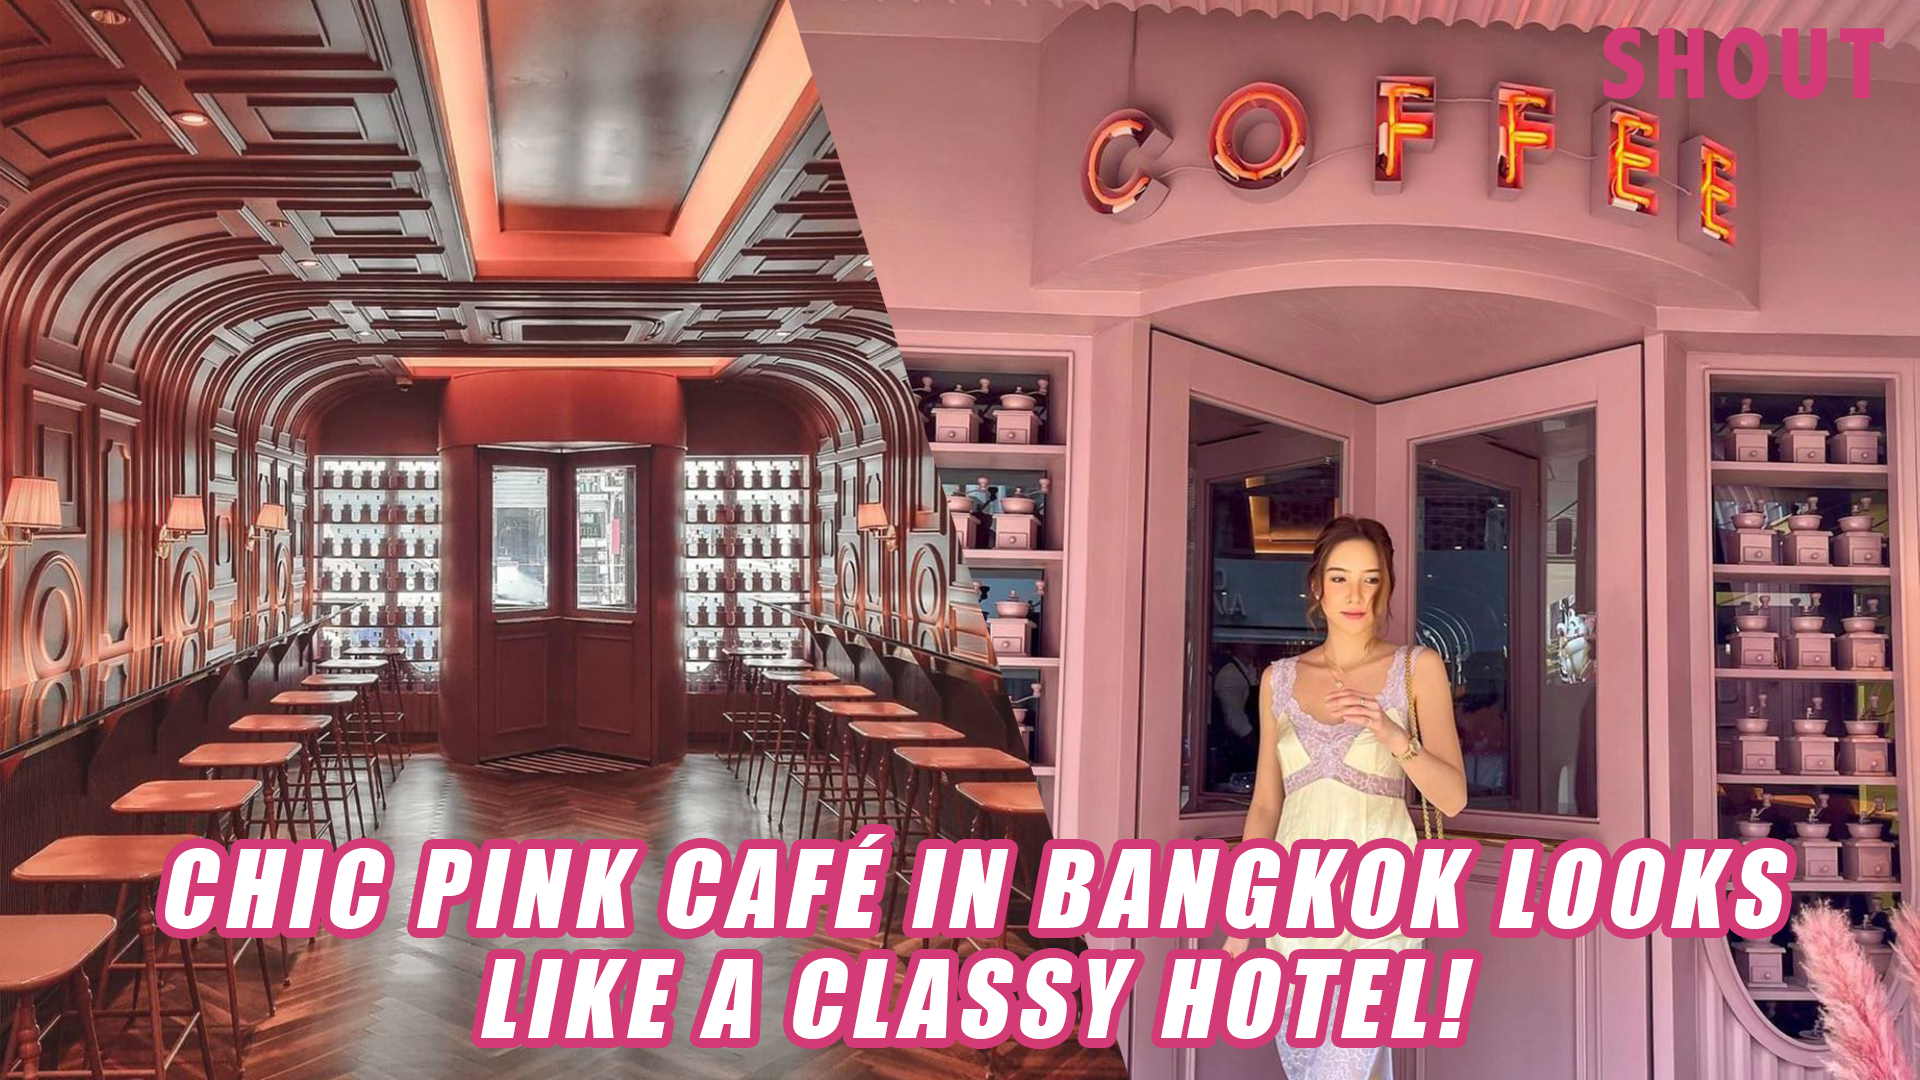 Gentlewoman Tank Top at The Cassette Coffee Pink Coffee Bar, Bangkok